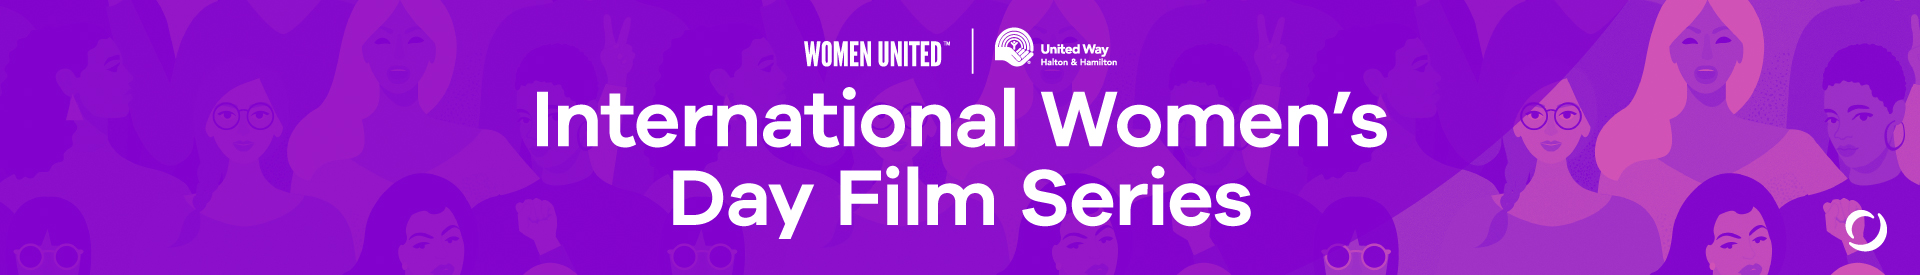 International Women's Day Film Series Banner